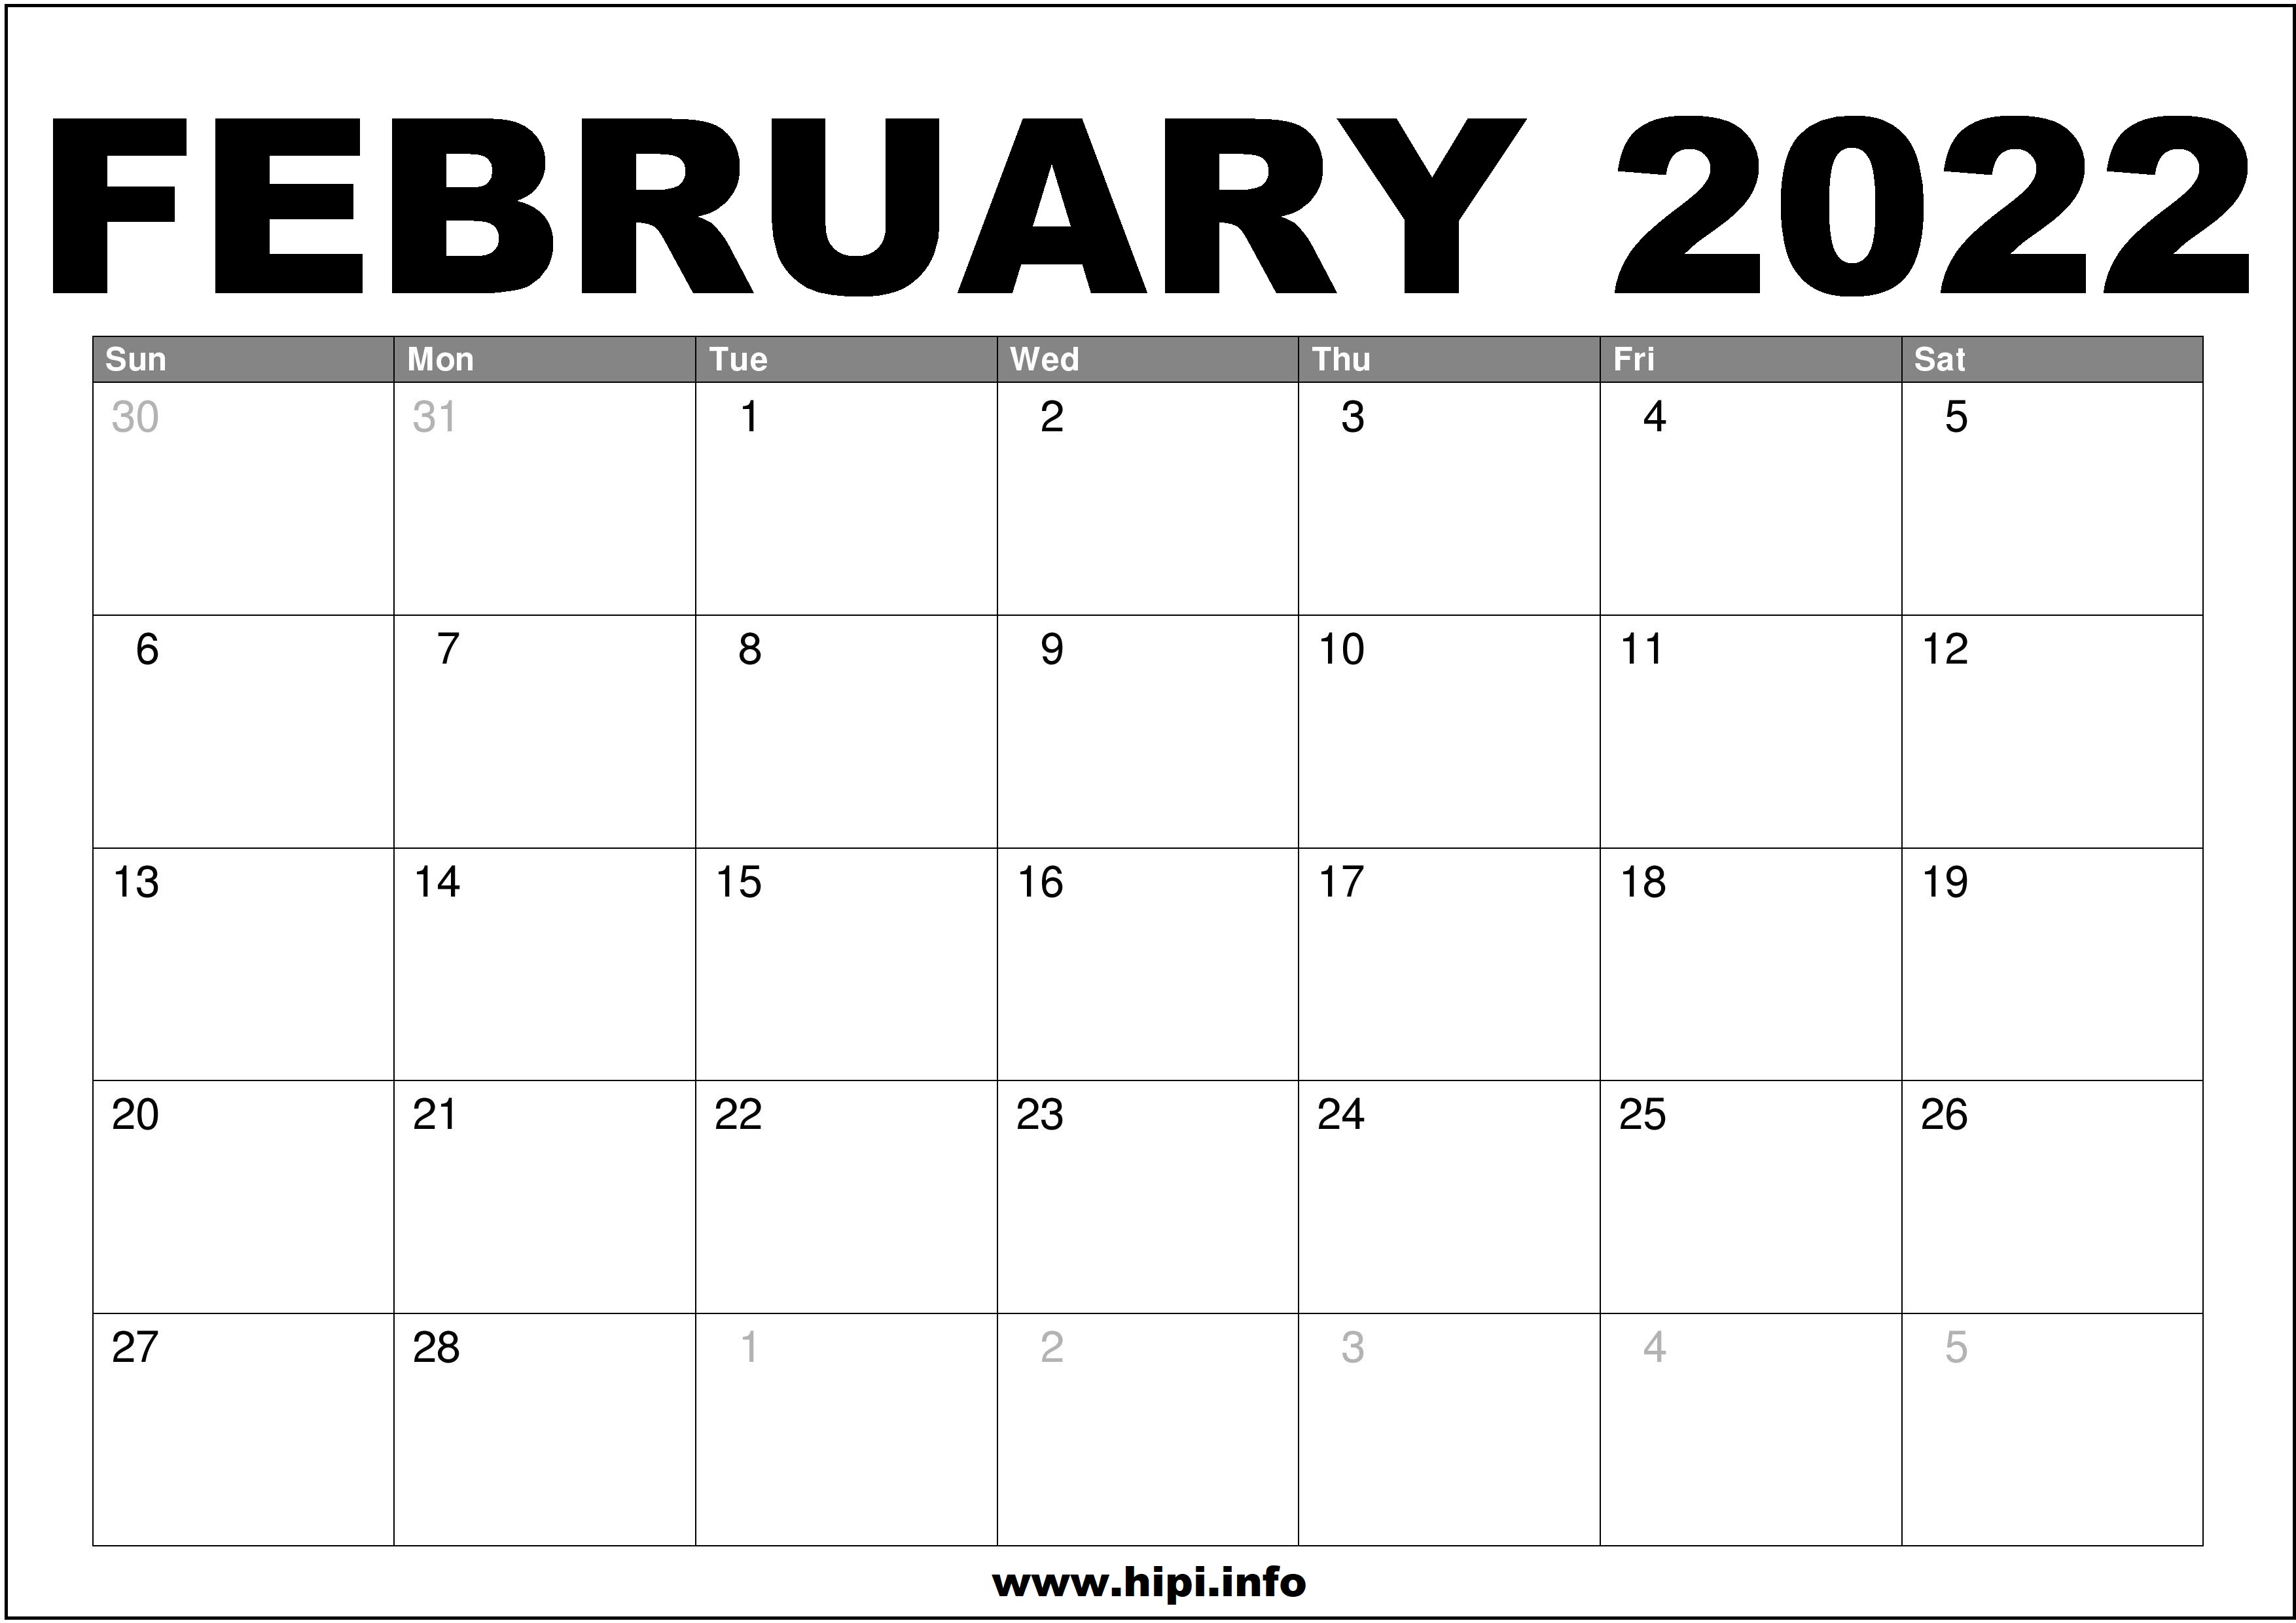 February 2022 Calendar Printable Free February 2022 Calendar Printable Free - Hipi.info | Calendars Printable Free